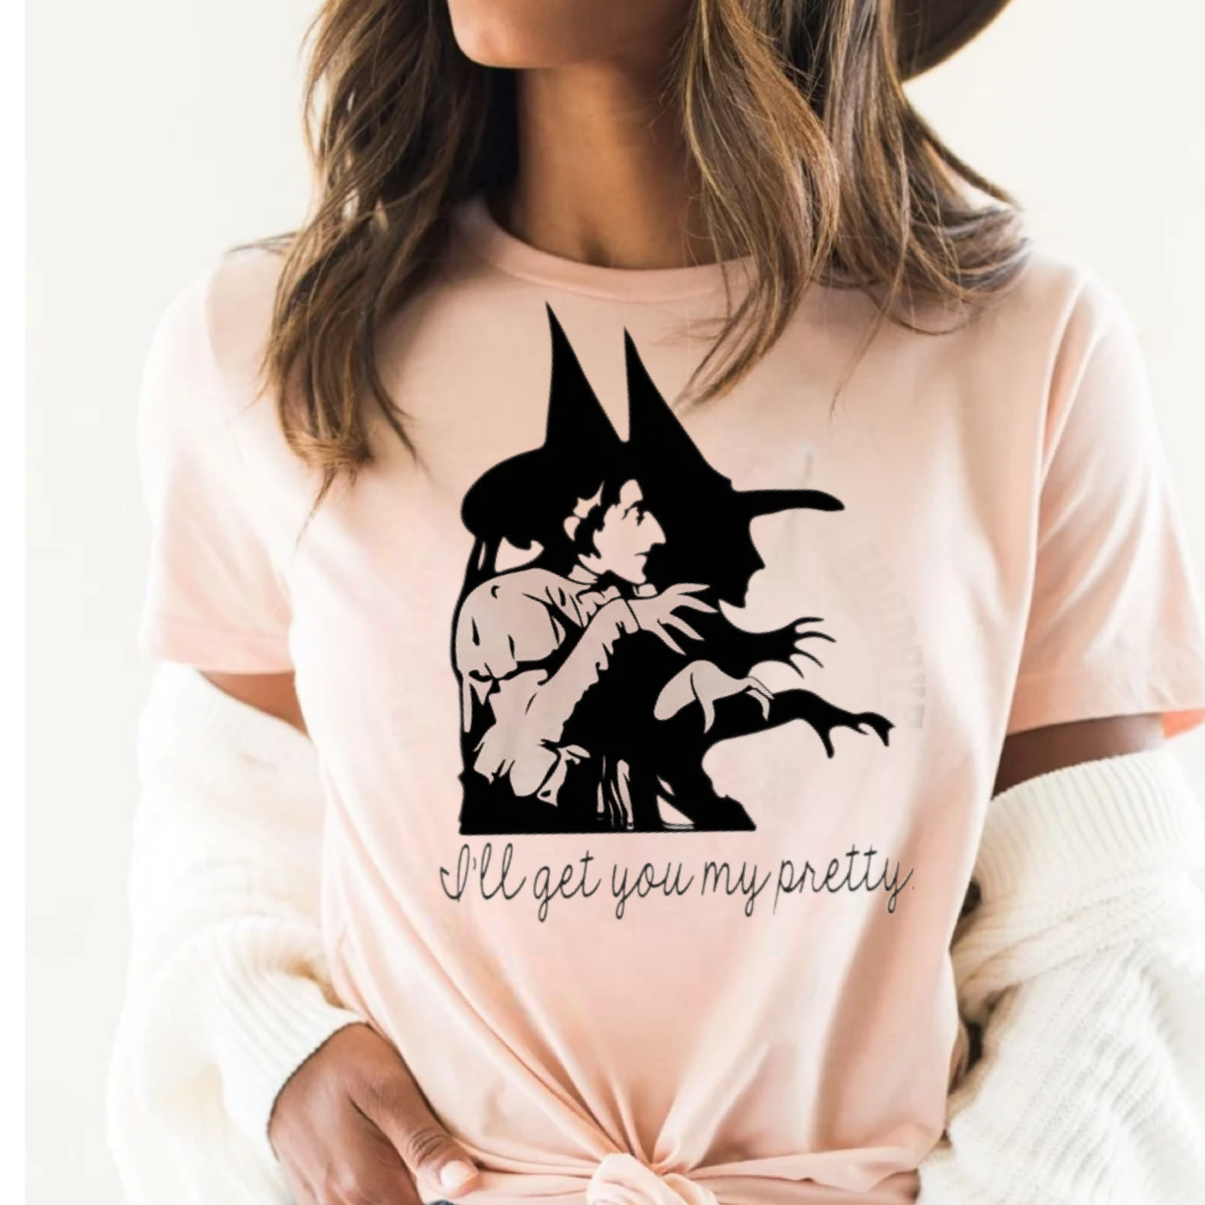 Ill get you my pretty shirt| Wizard of oz Shirt| Witch shirt